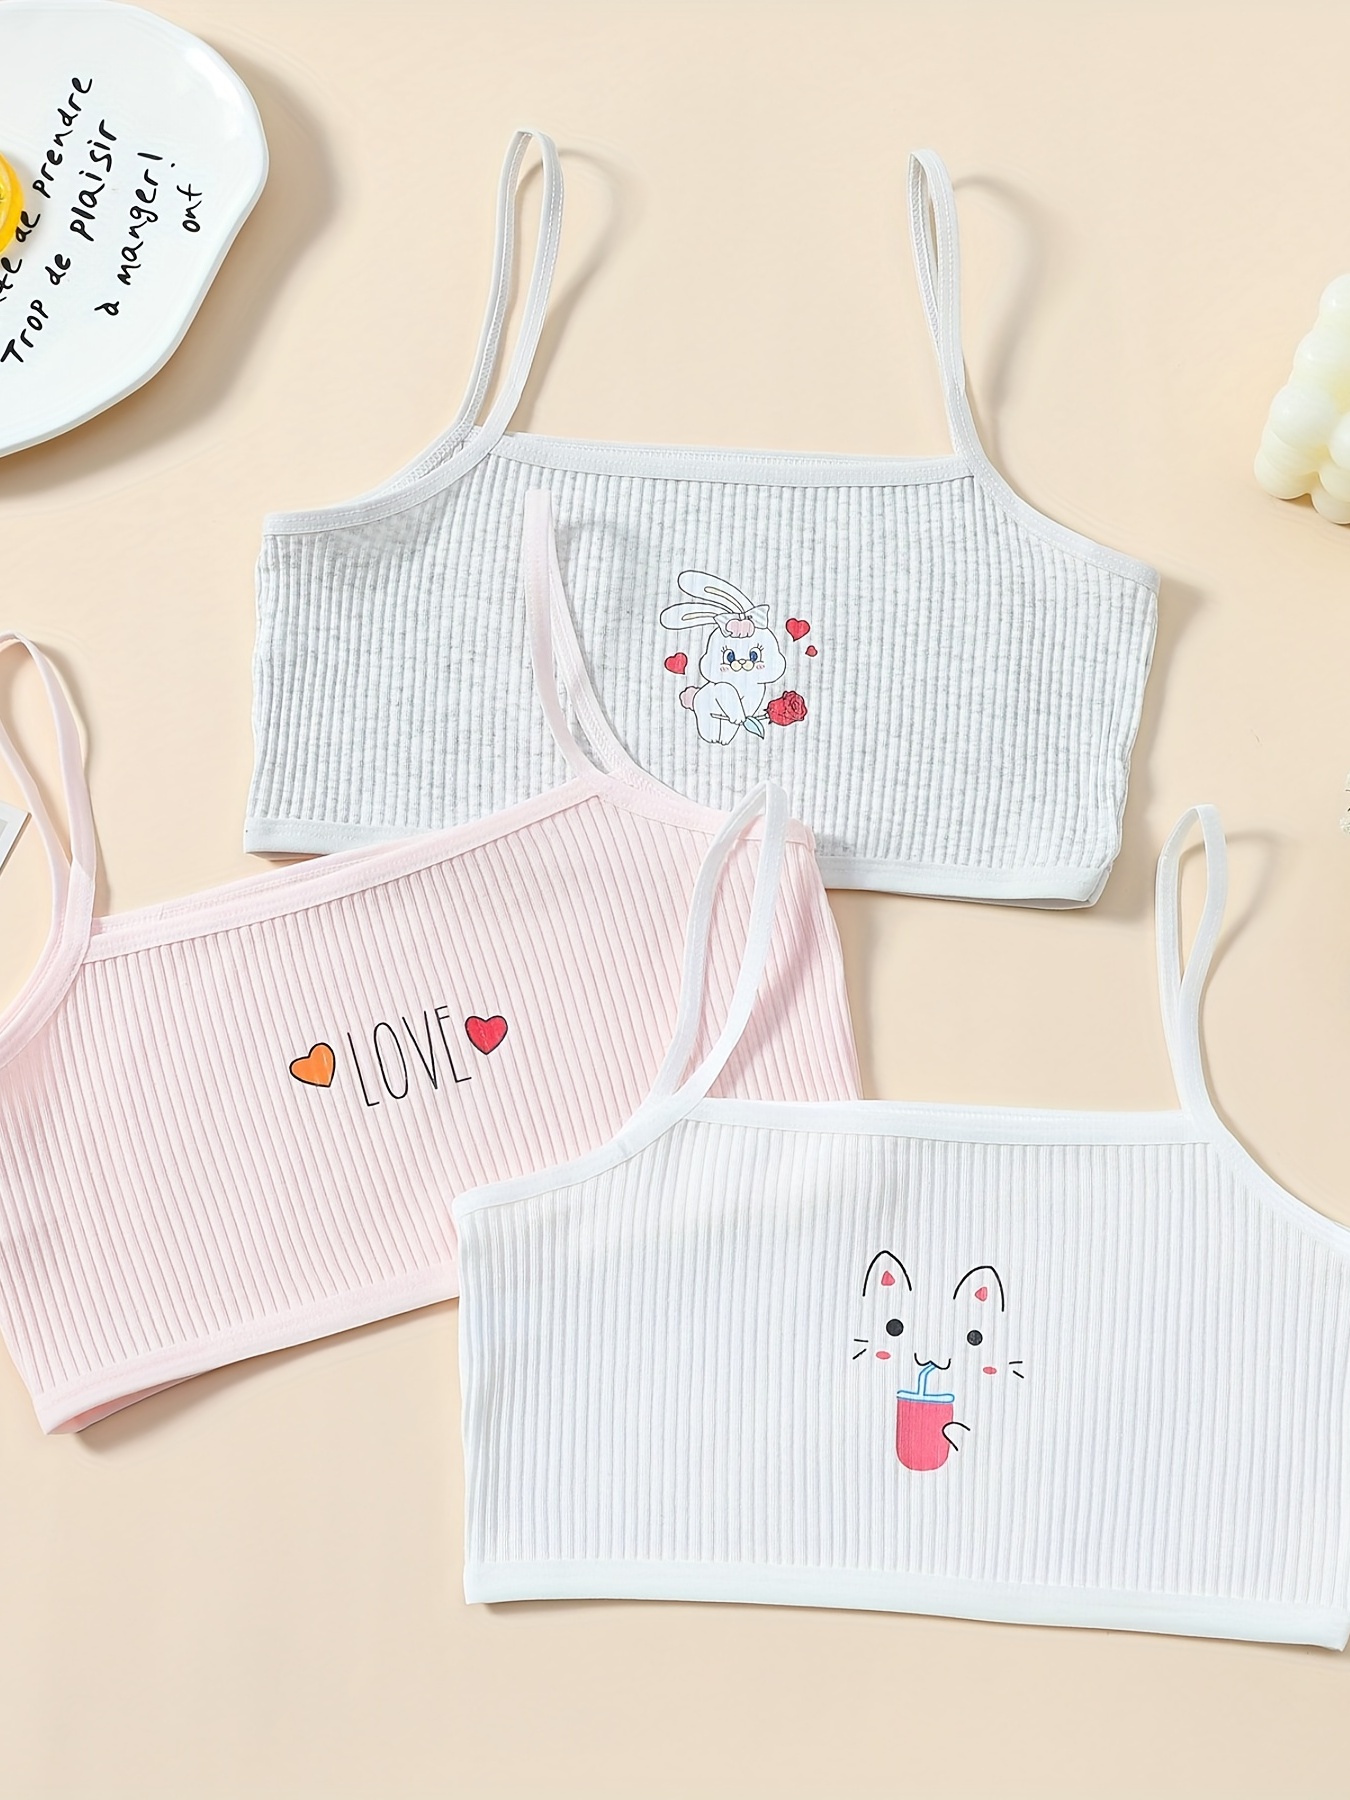 2pcs/Set Cute And Simple Cartoon Pattern Bra And Underwear Set For Tween  Girls